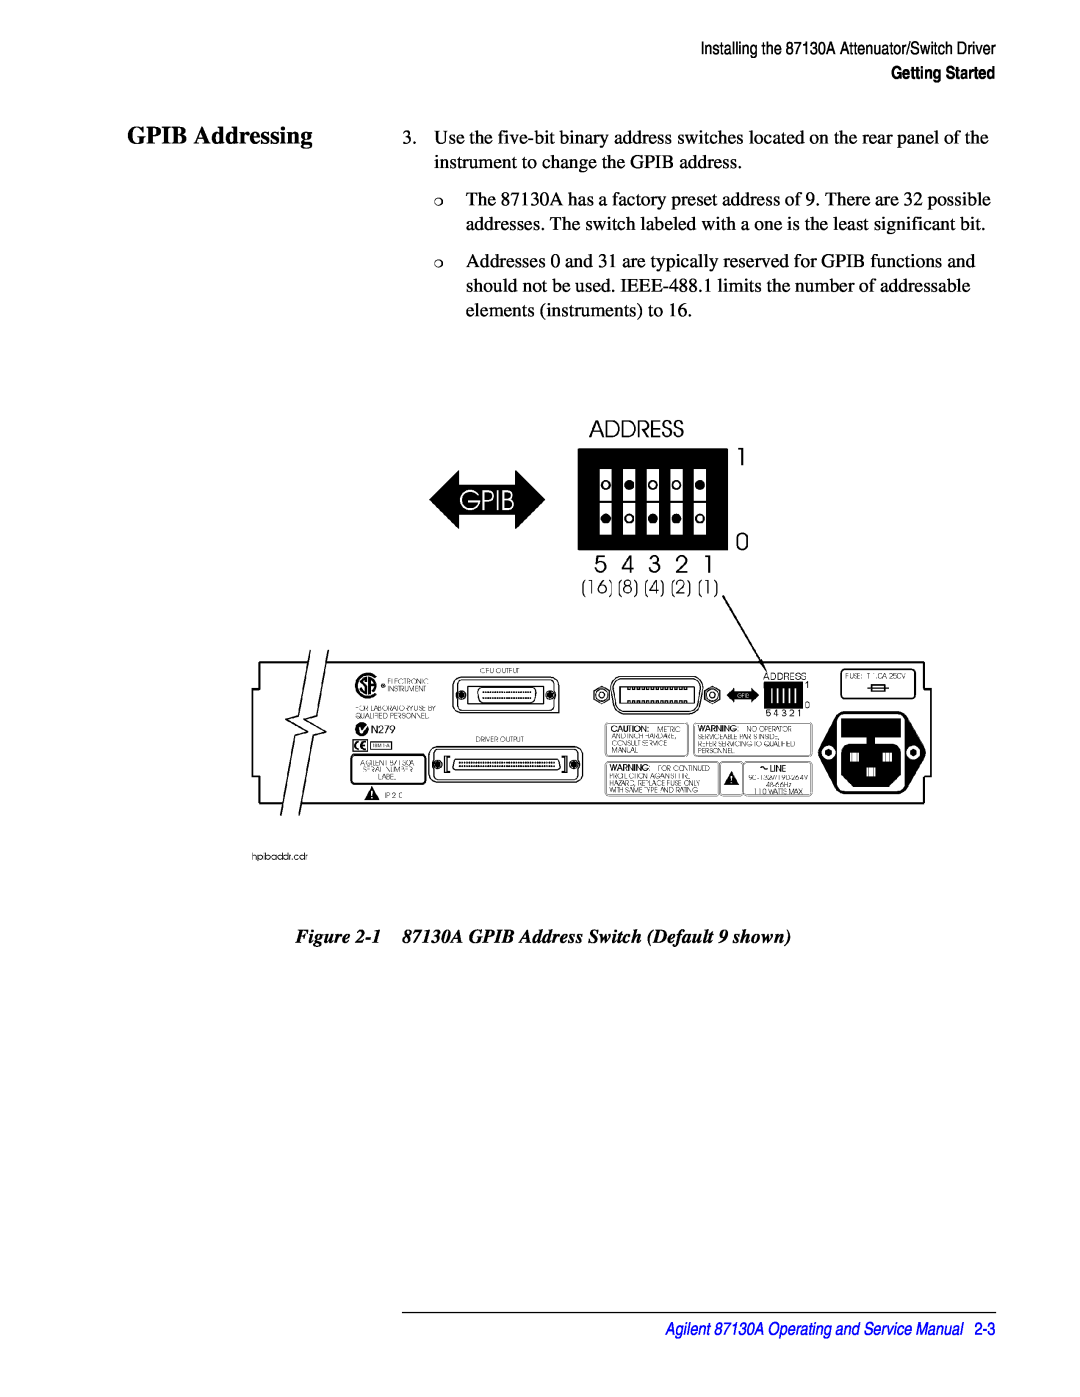 Agilent Technologies manual GPIB Addressing, 1 87130A GPIB Address Switch Default 9 shown 